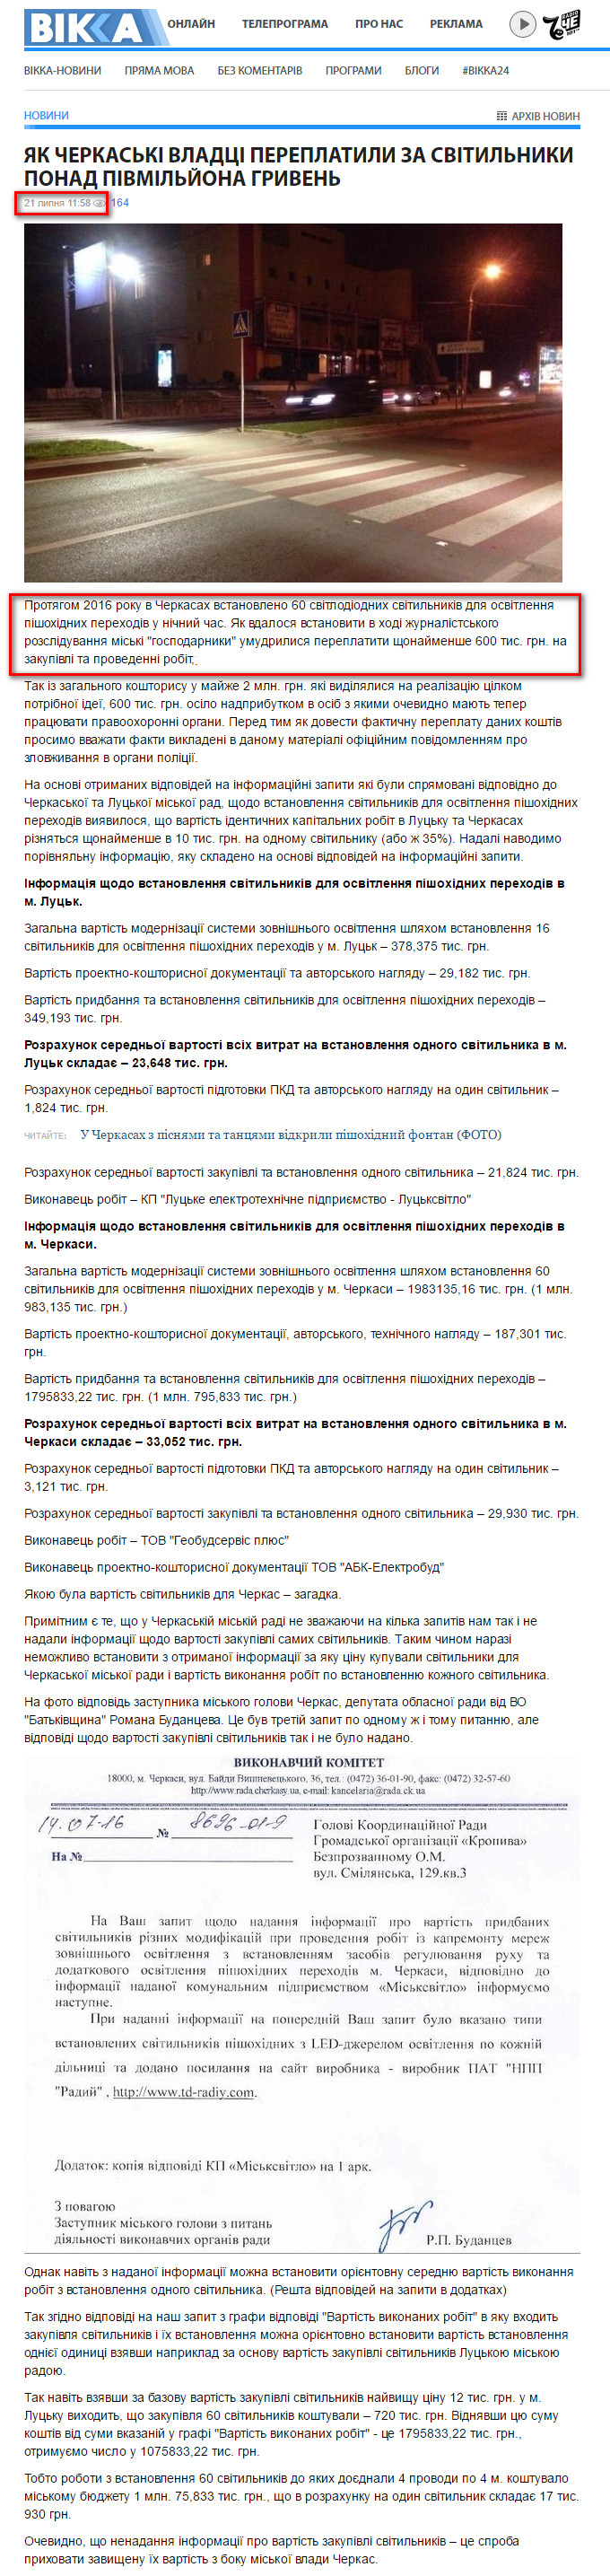 http://vikka.ua/novini/69274-yak-cherkaskij-mer-ta-komanda-gospodarnikiv-ponad-pivmiljona-griven-za-svitilniki-pereplatila.htm